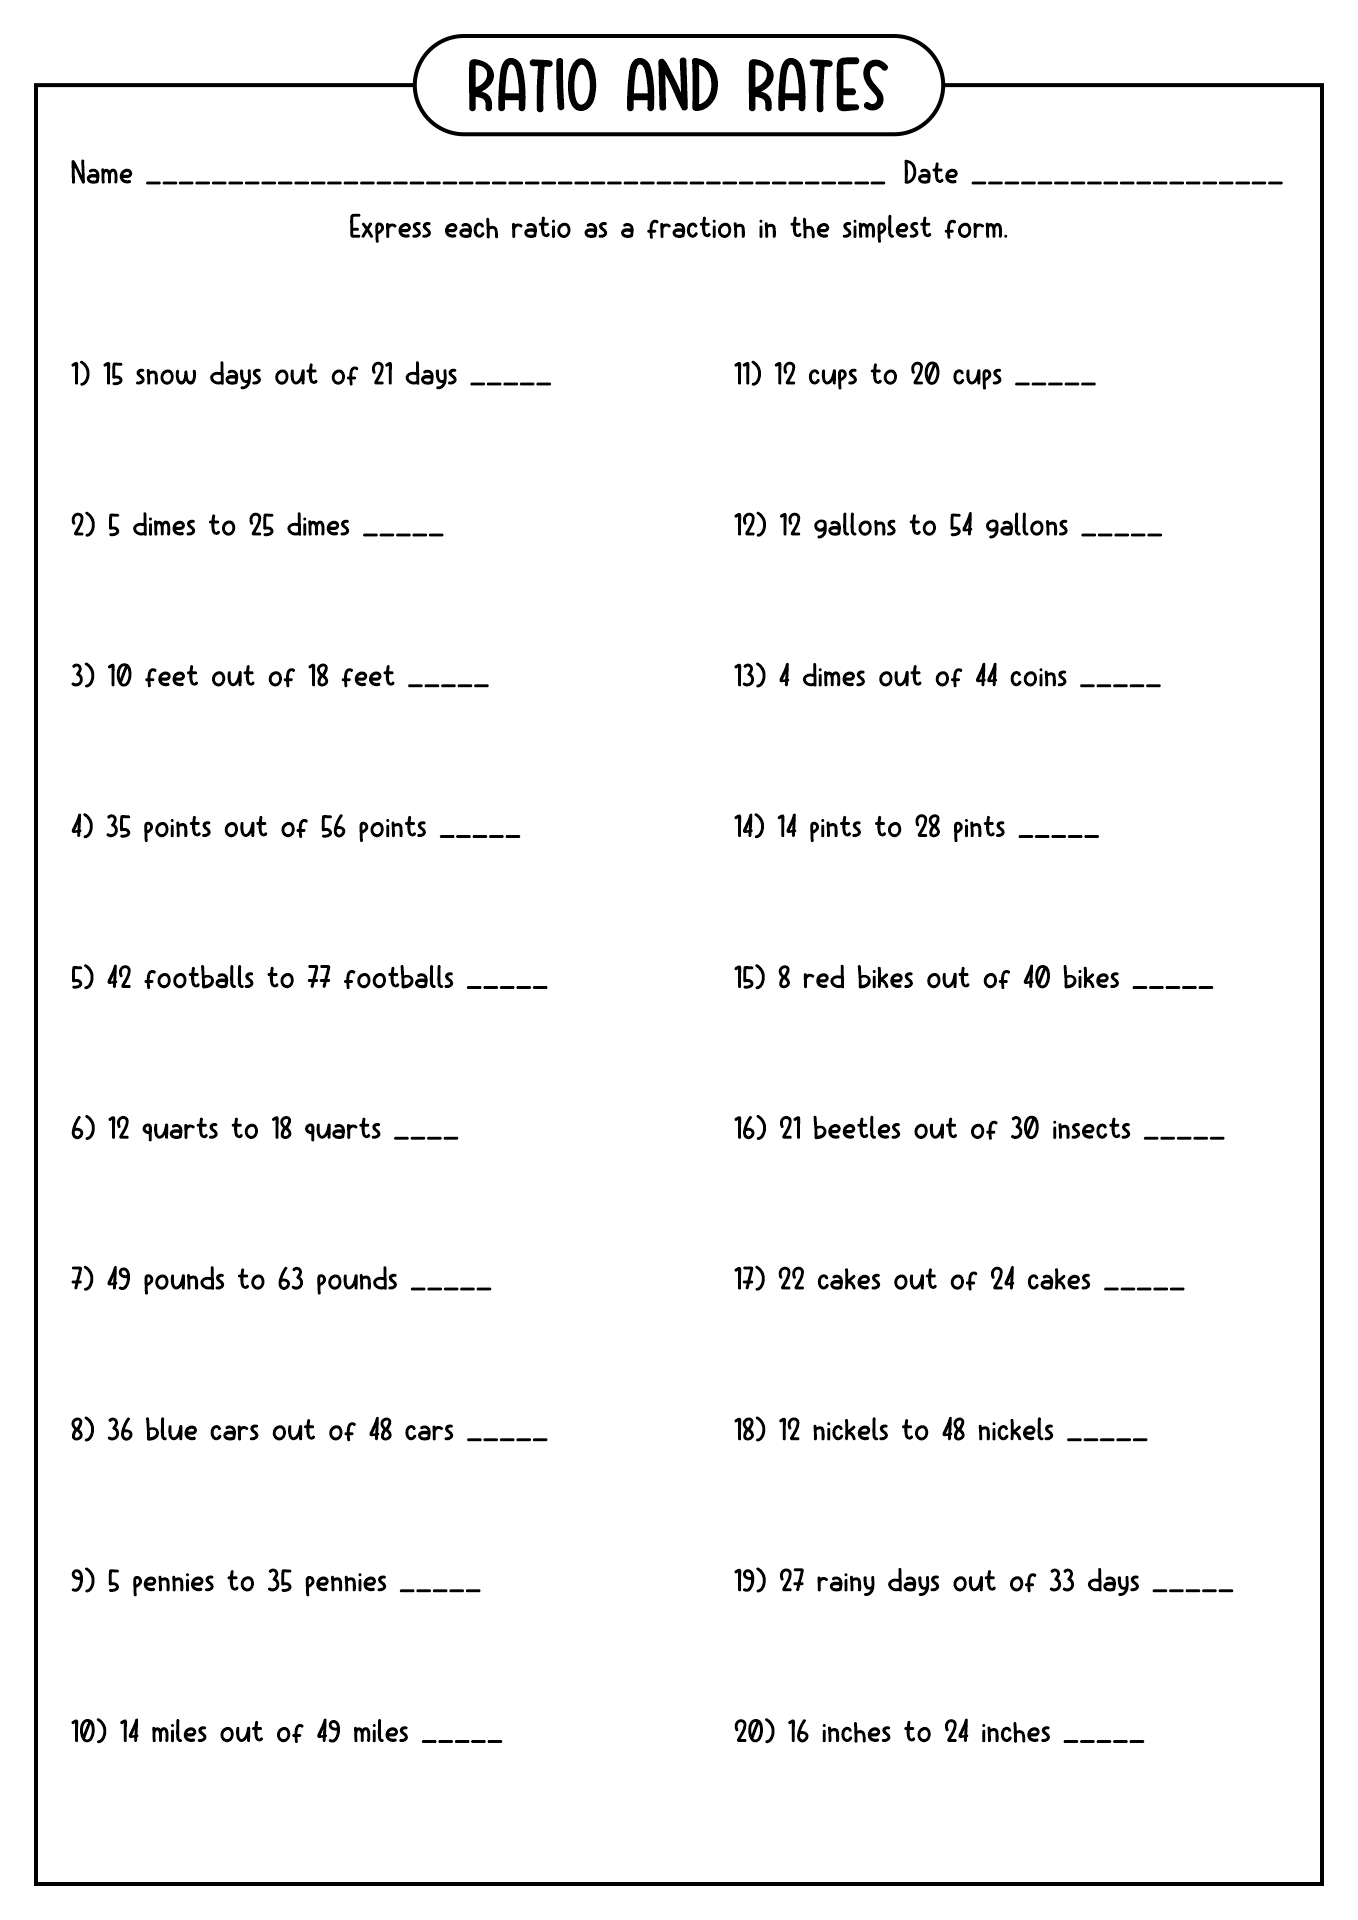 ratios-worksheets-grade-6